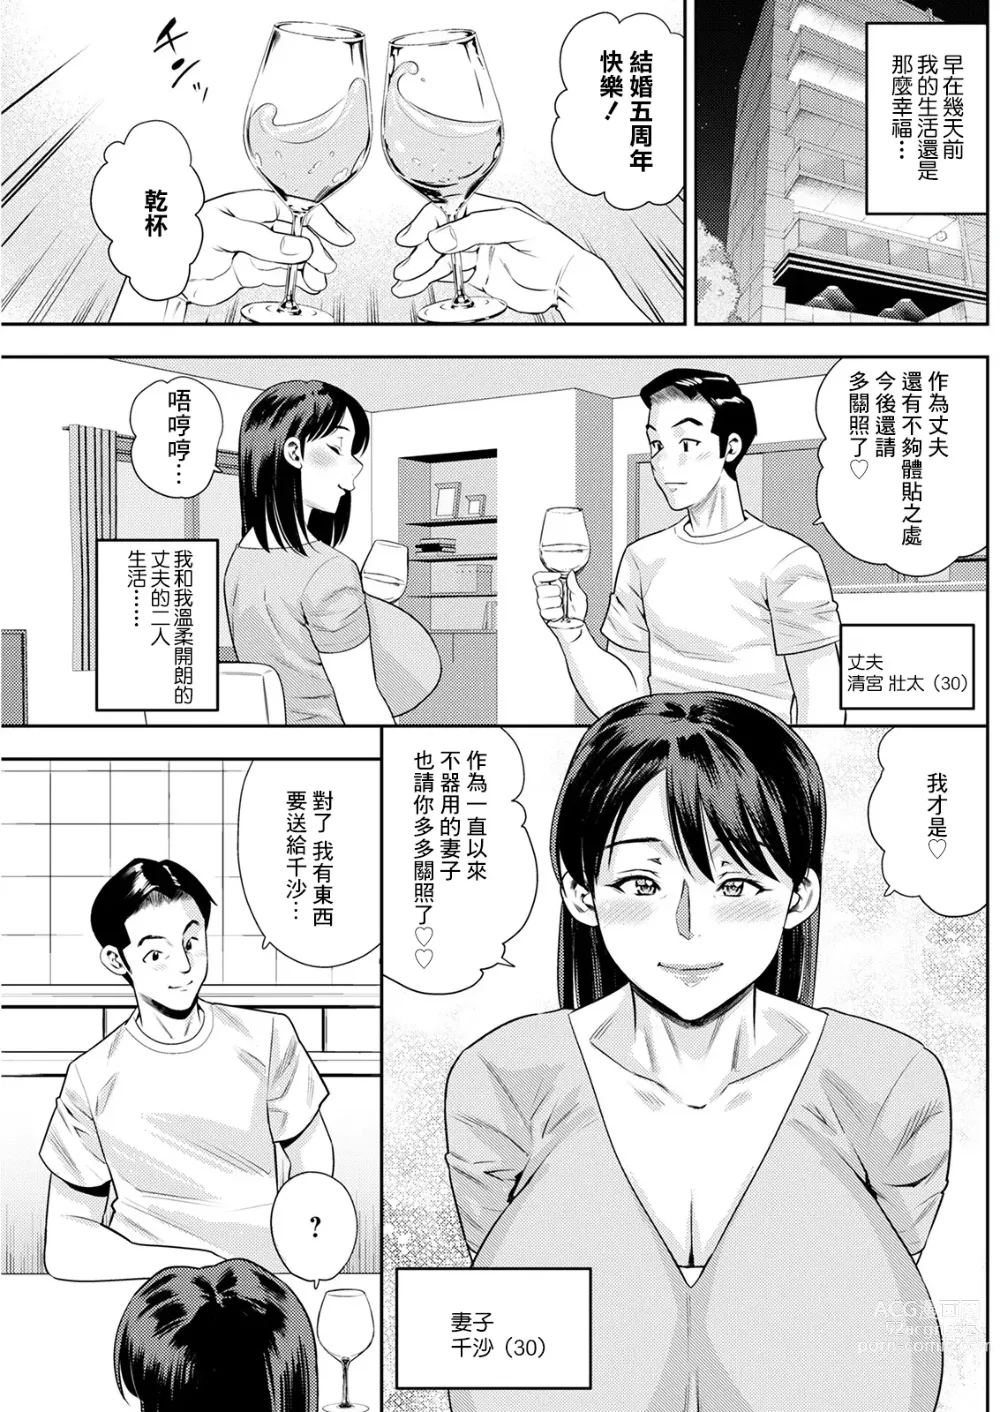 Page 5 of manga Kokoro wa Zettai Ochimasen... Zenpen